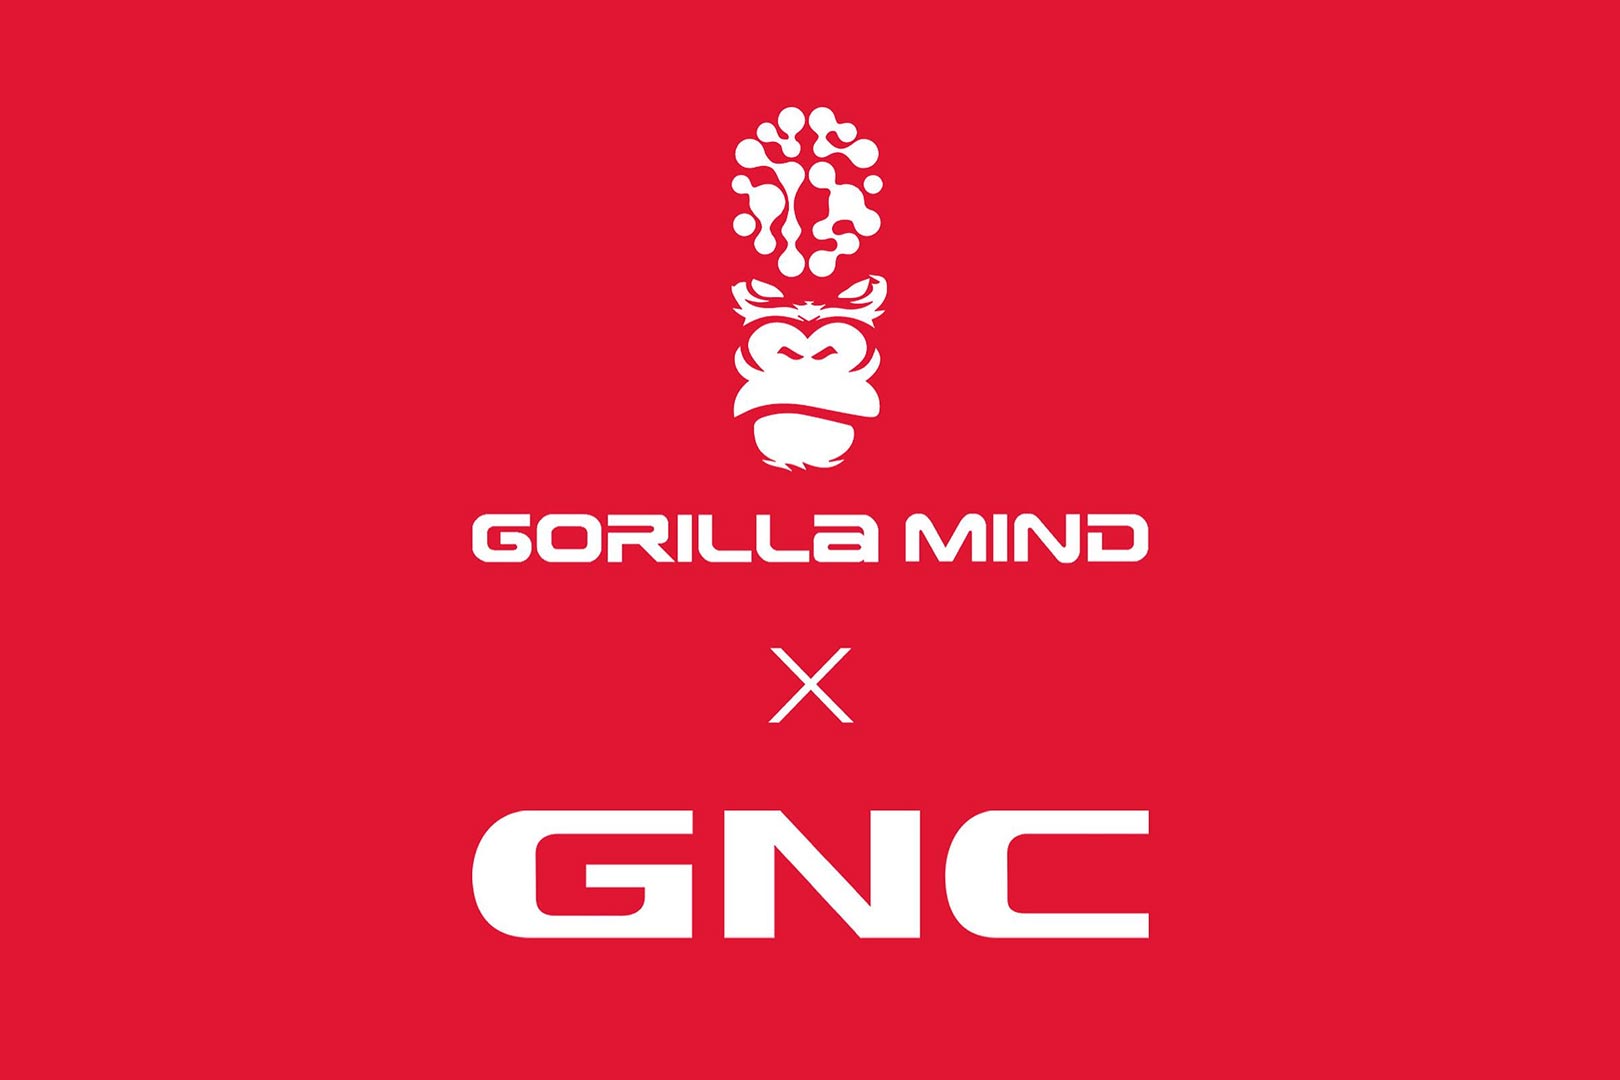 Gorilla Mind X Gnc